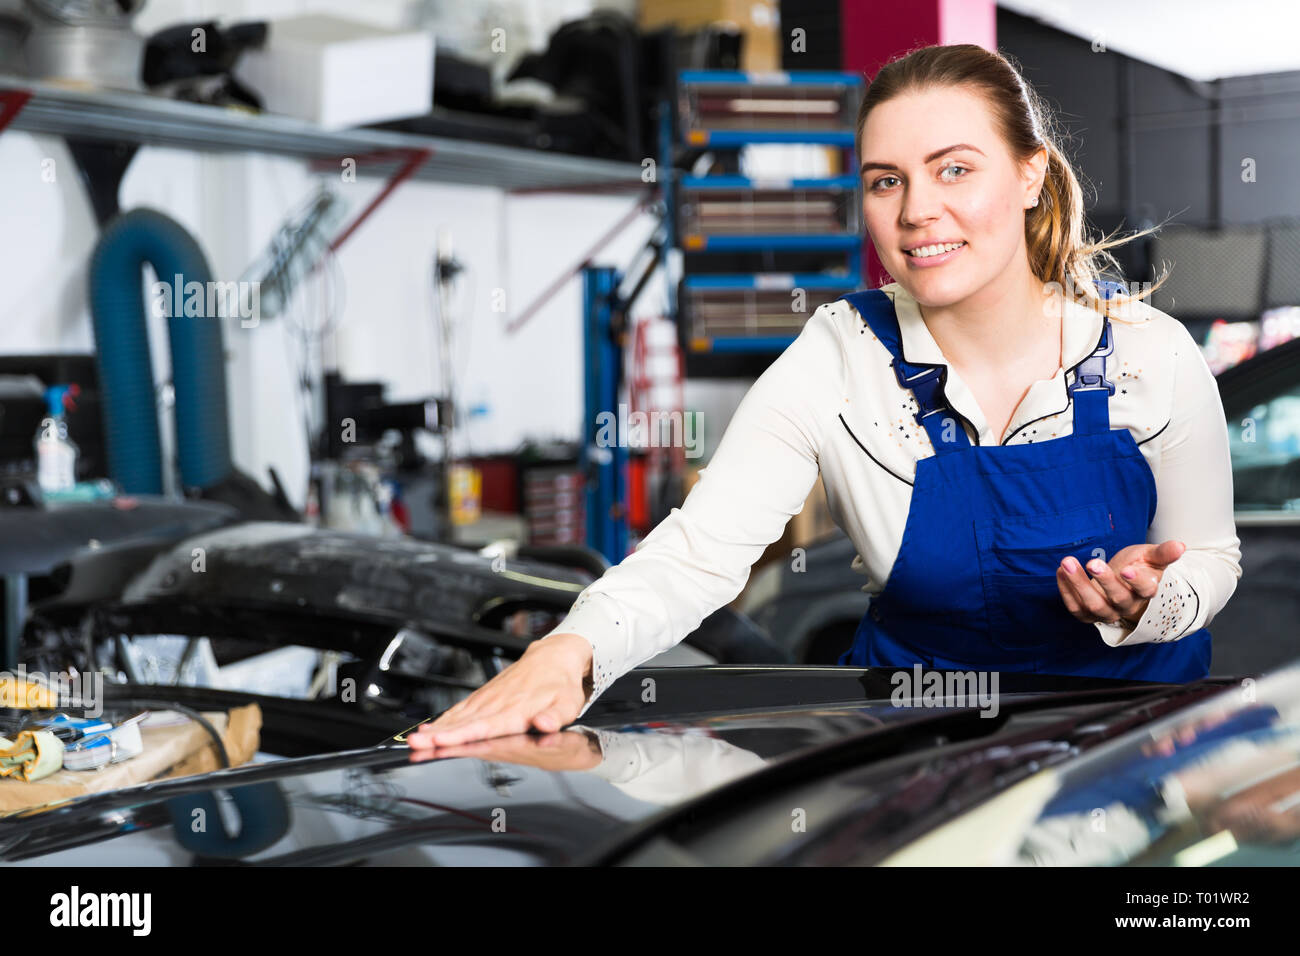 Young woman mechanic demonstrating repainted car in auto repair shop Stock Photo